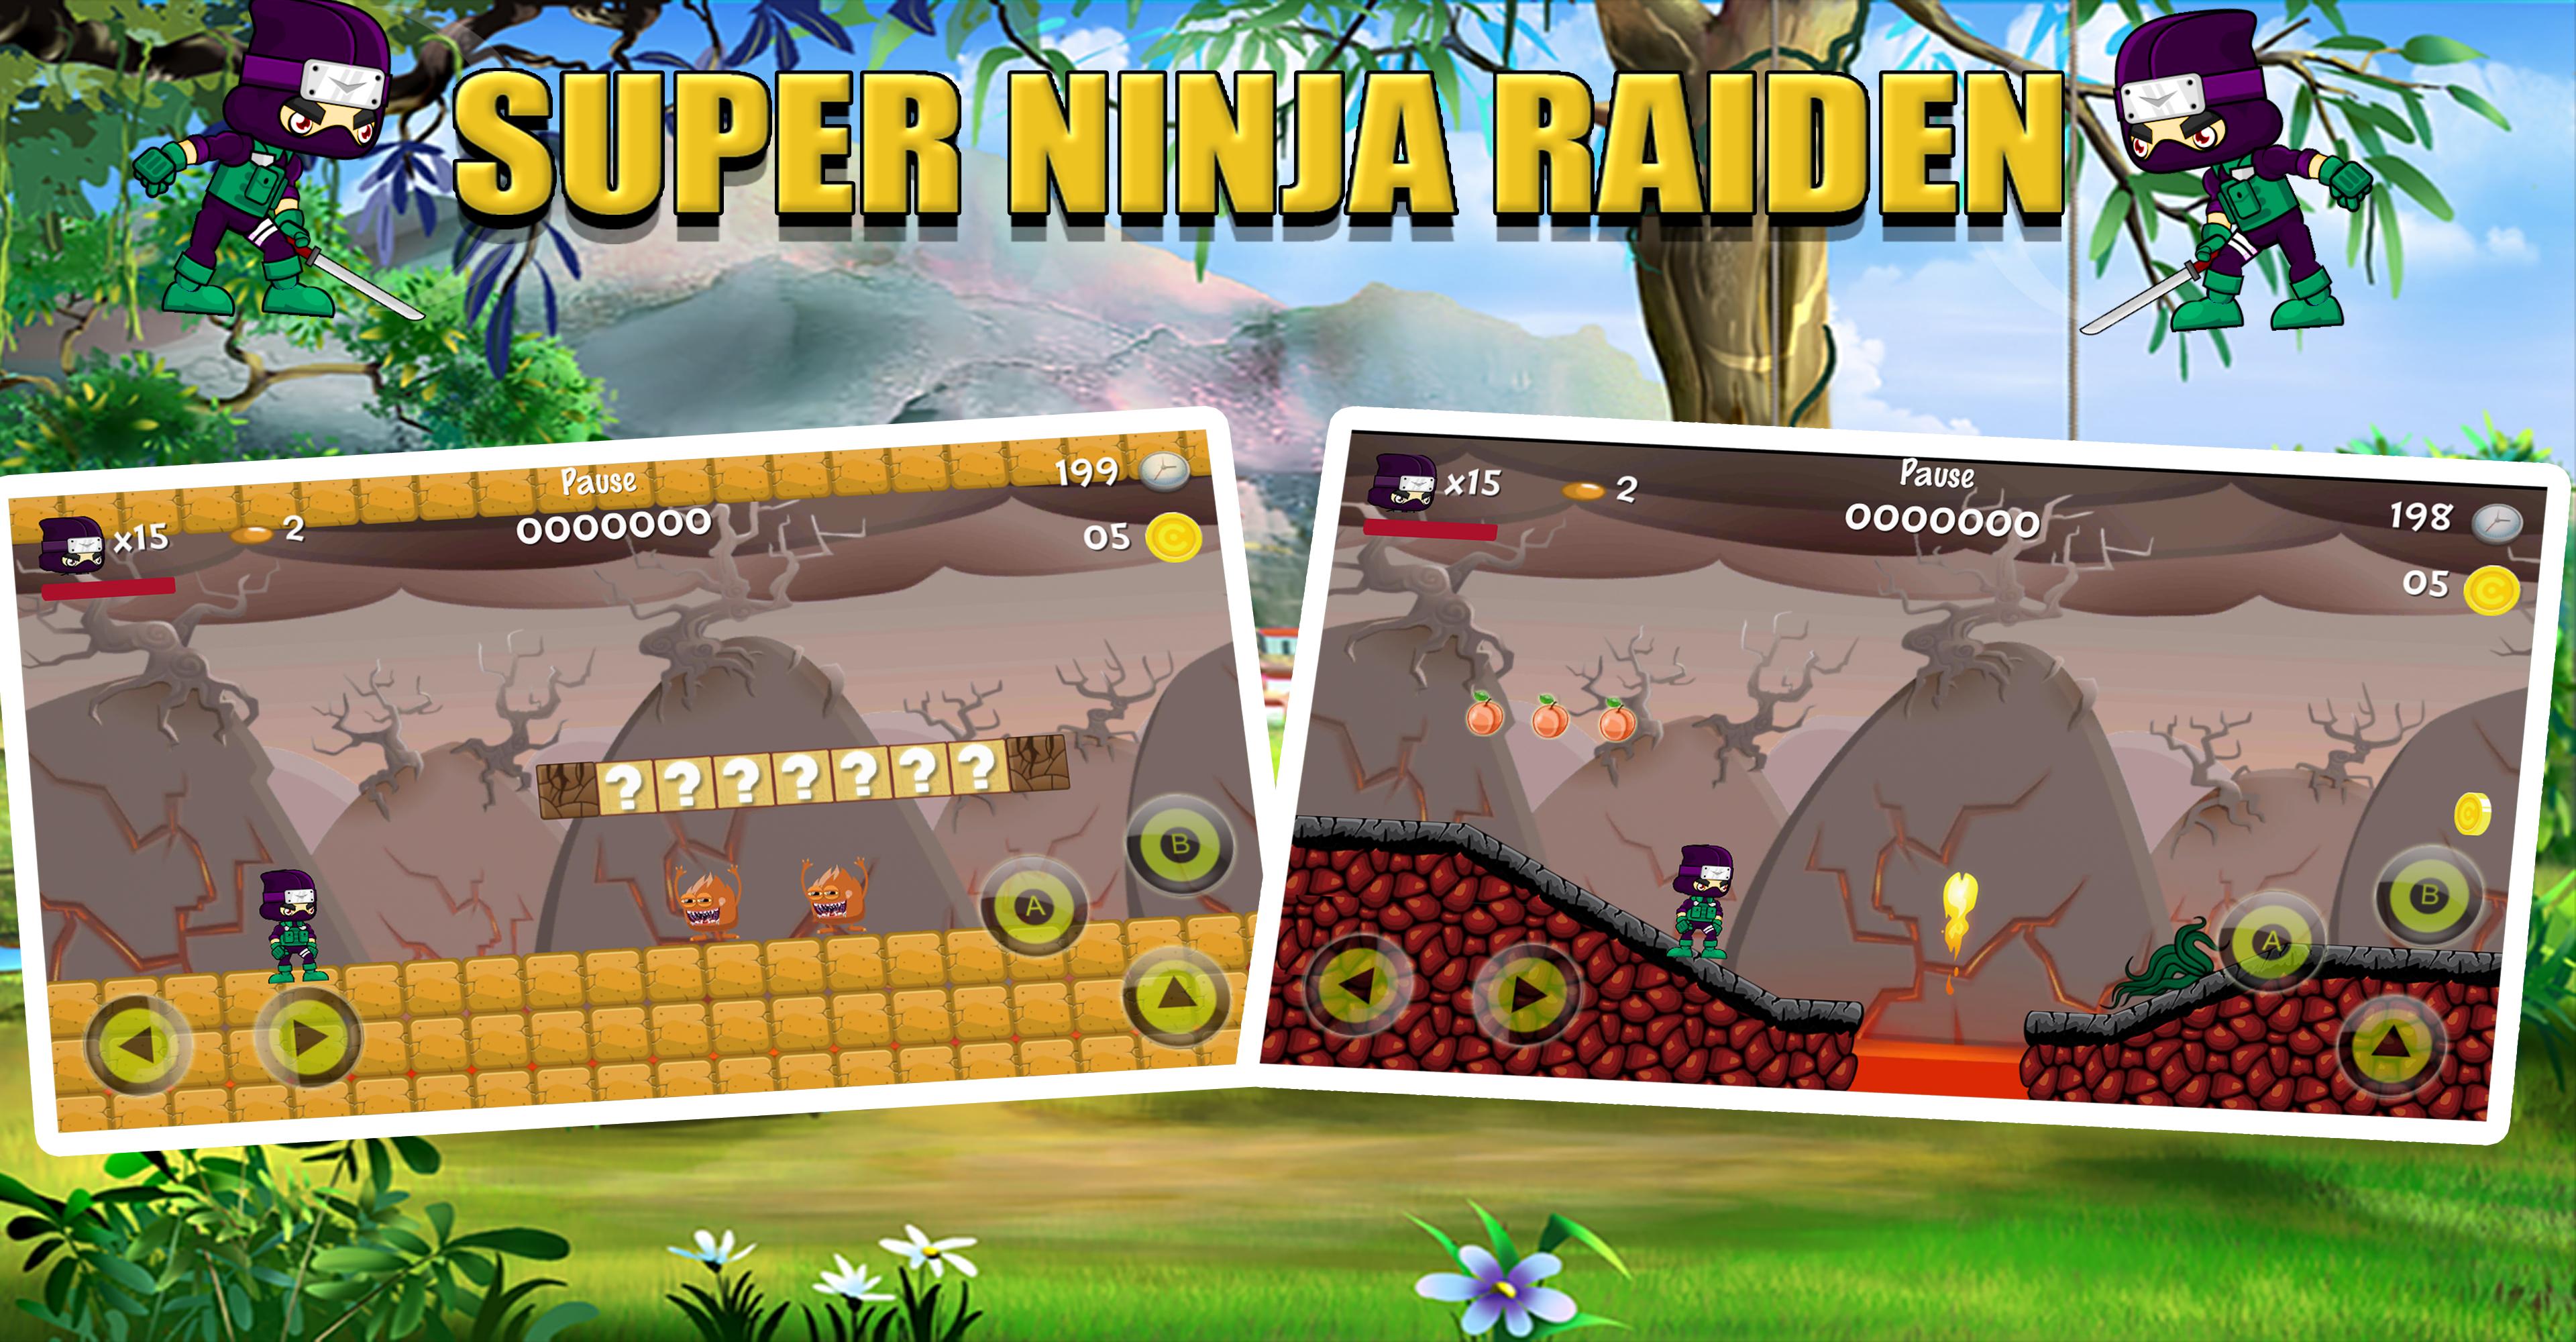 Super Ninja Raiden For Android Apk Download - raiden 2 roblox